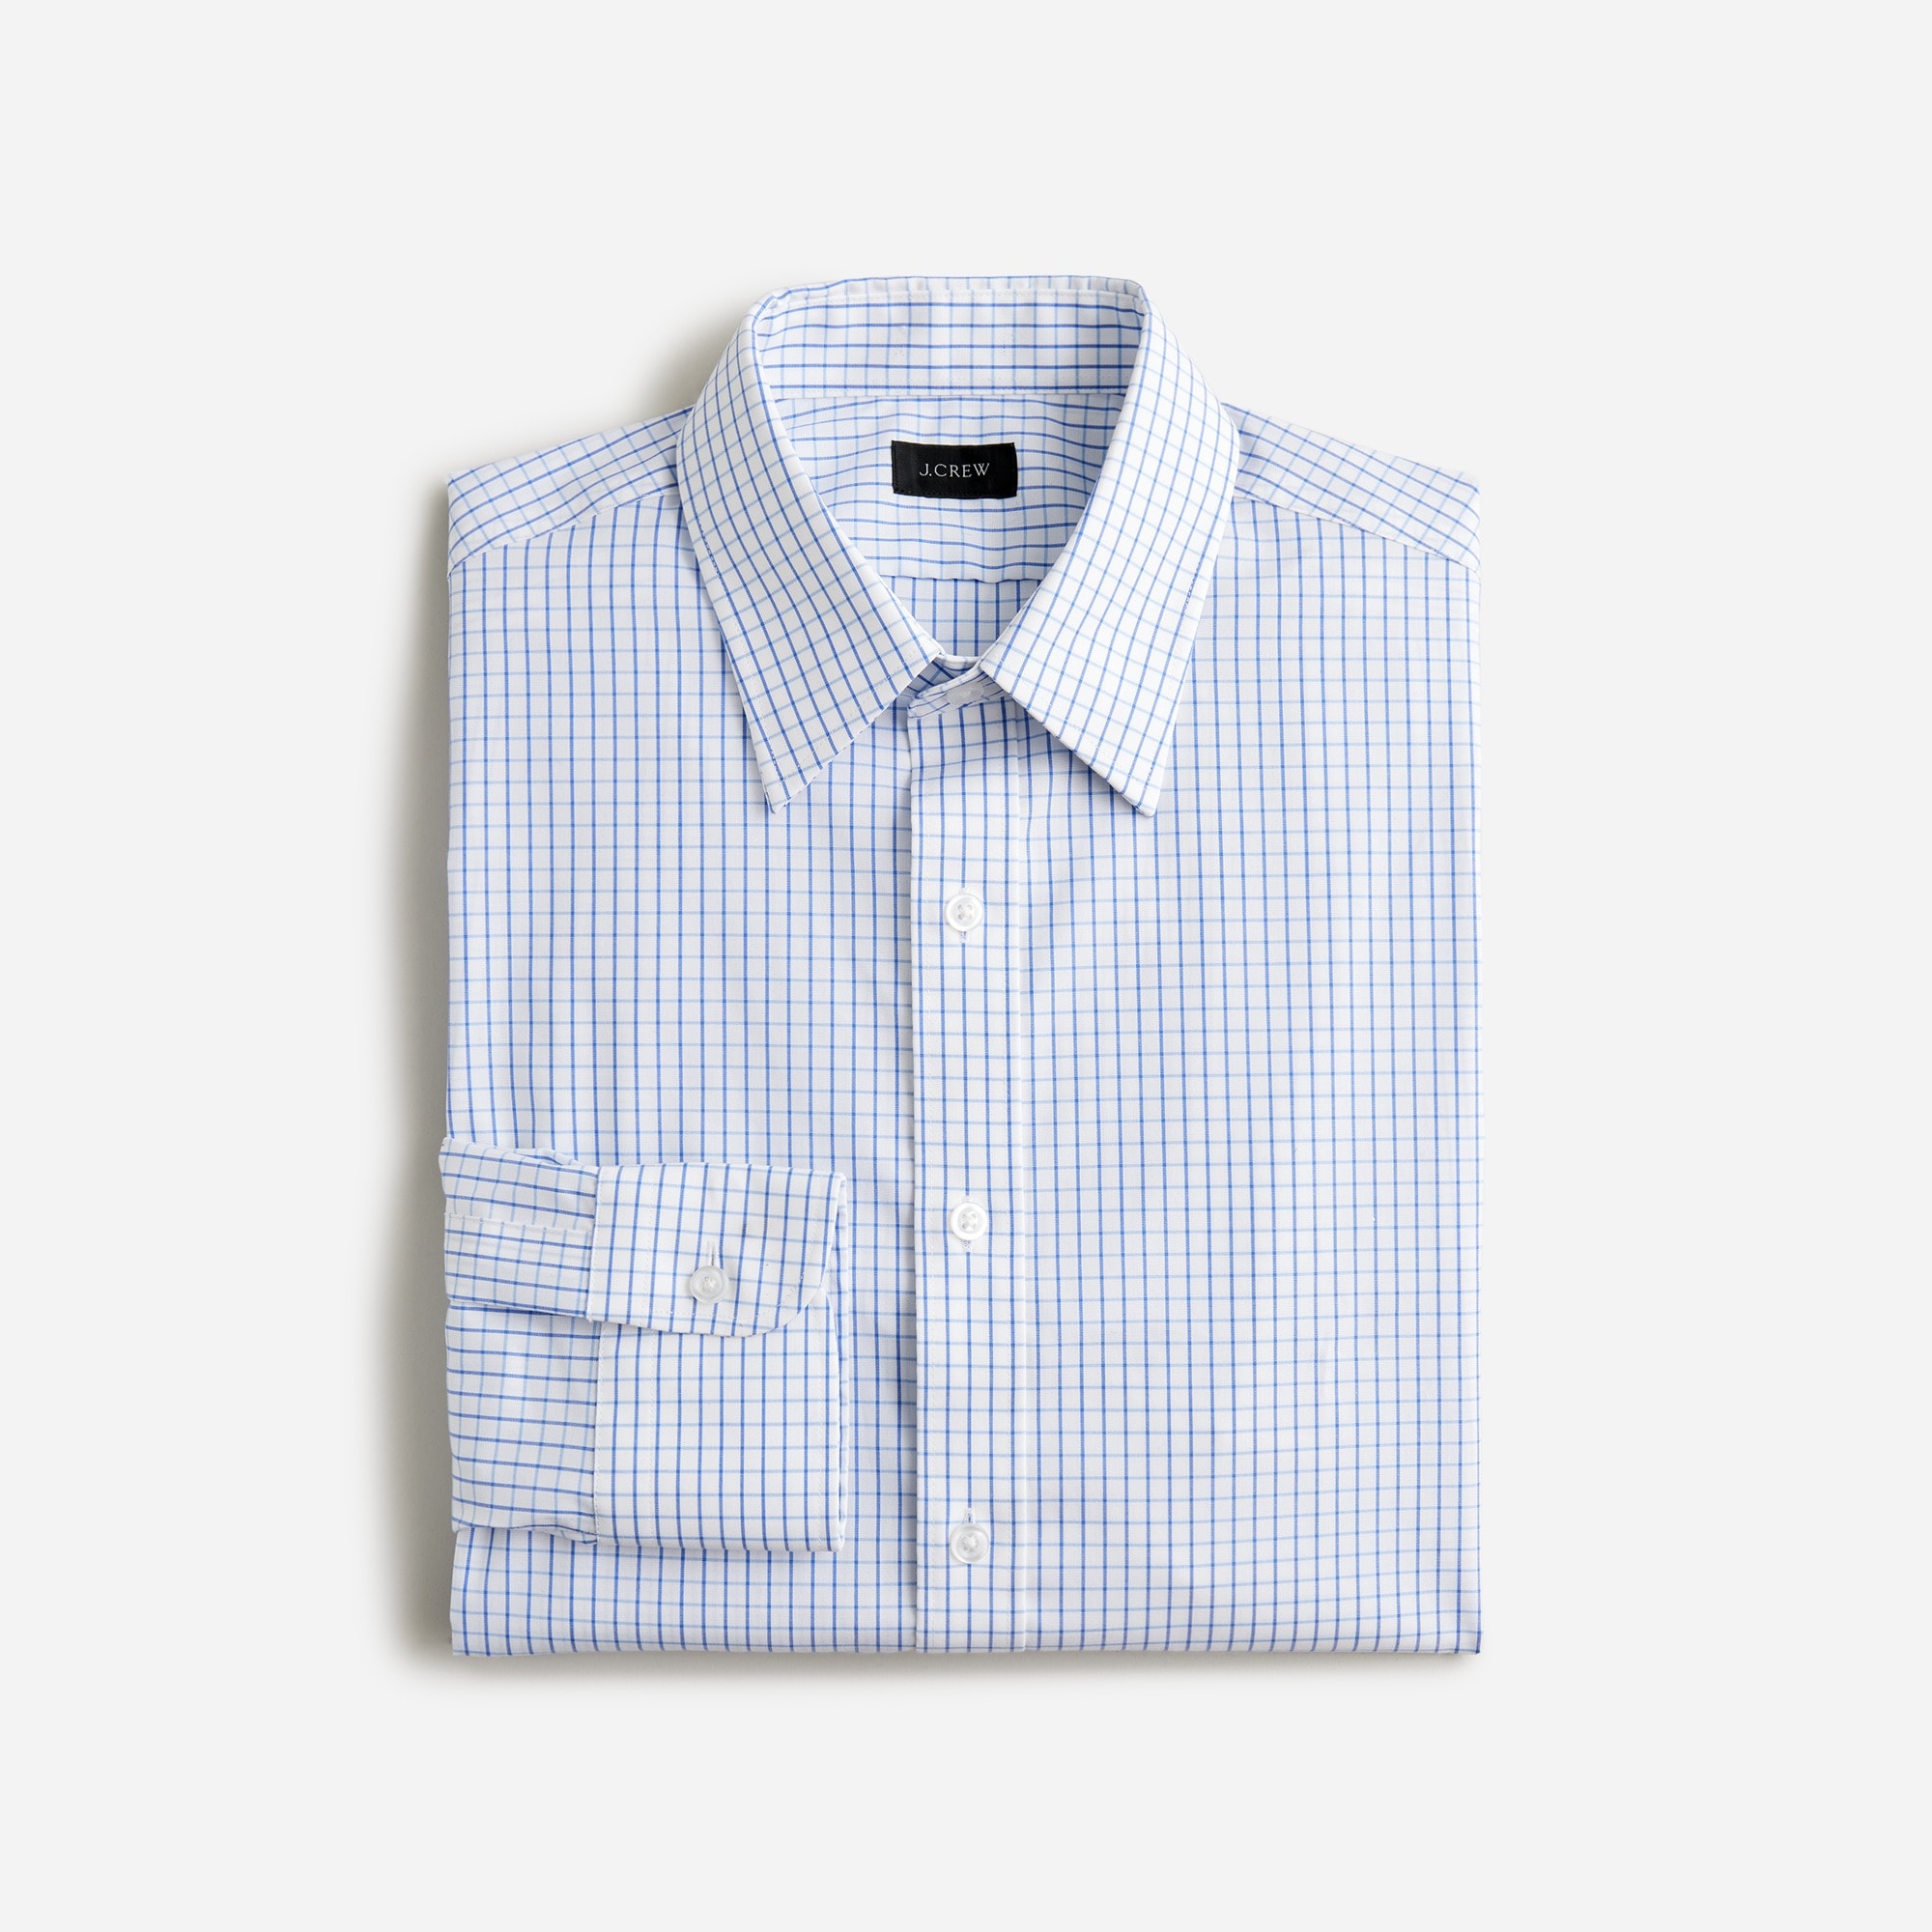  Tall Bowery point-collar stretch cotton shirt